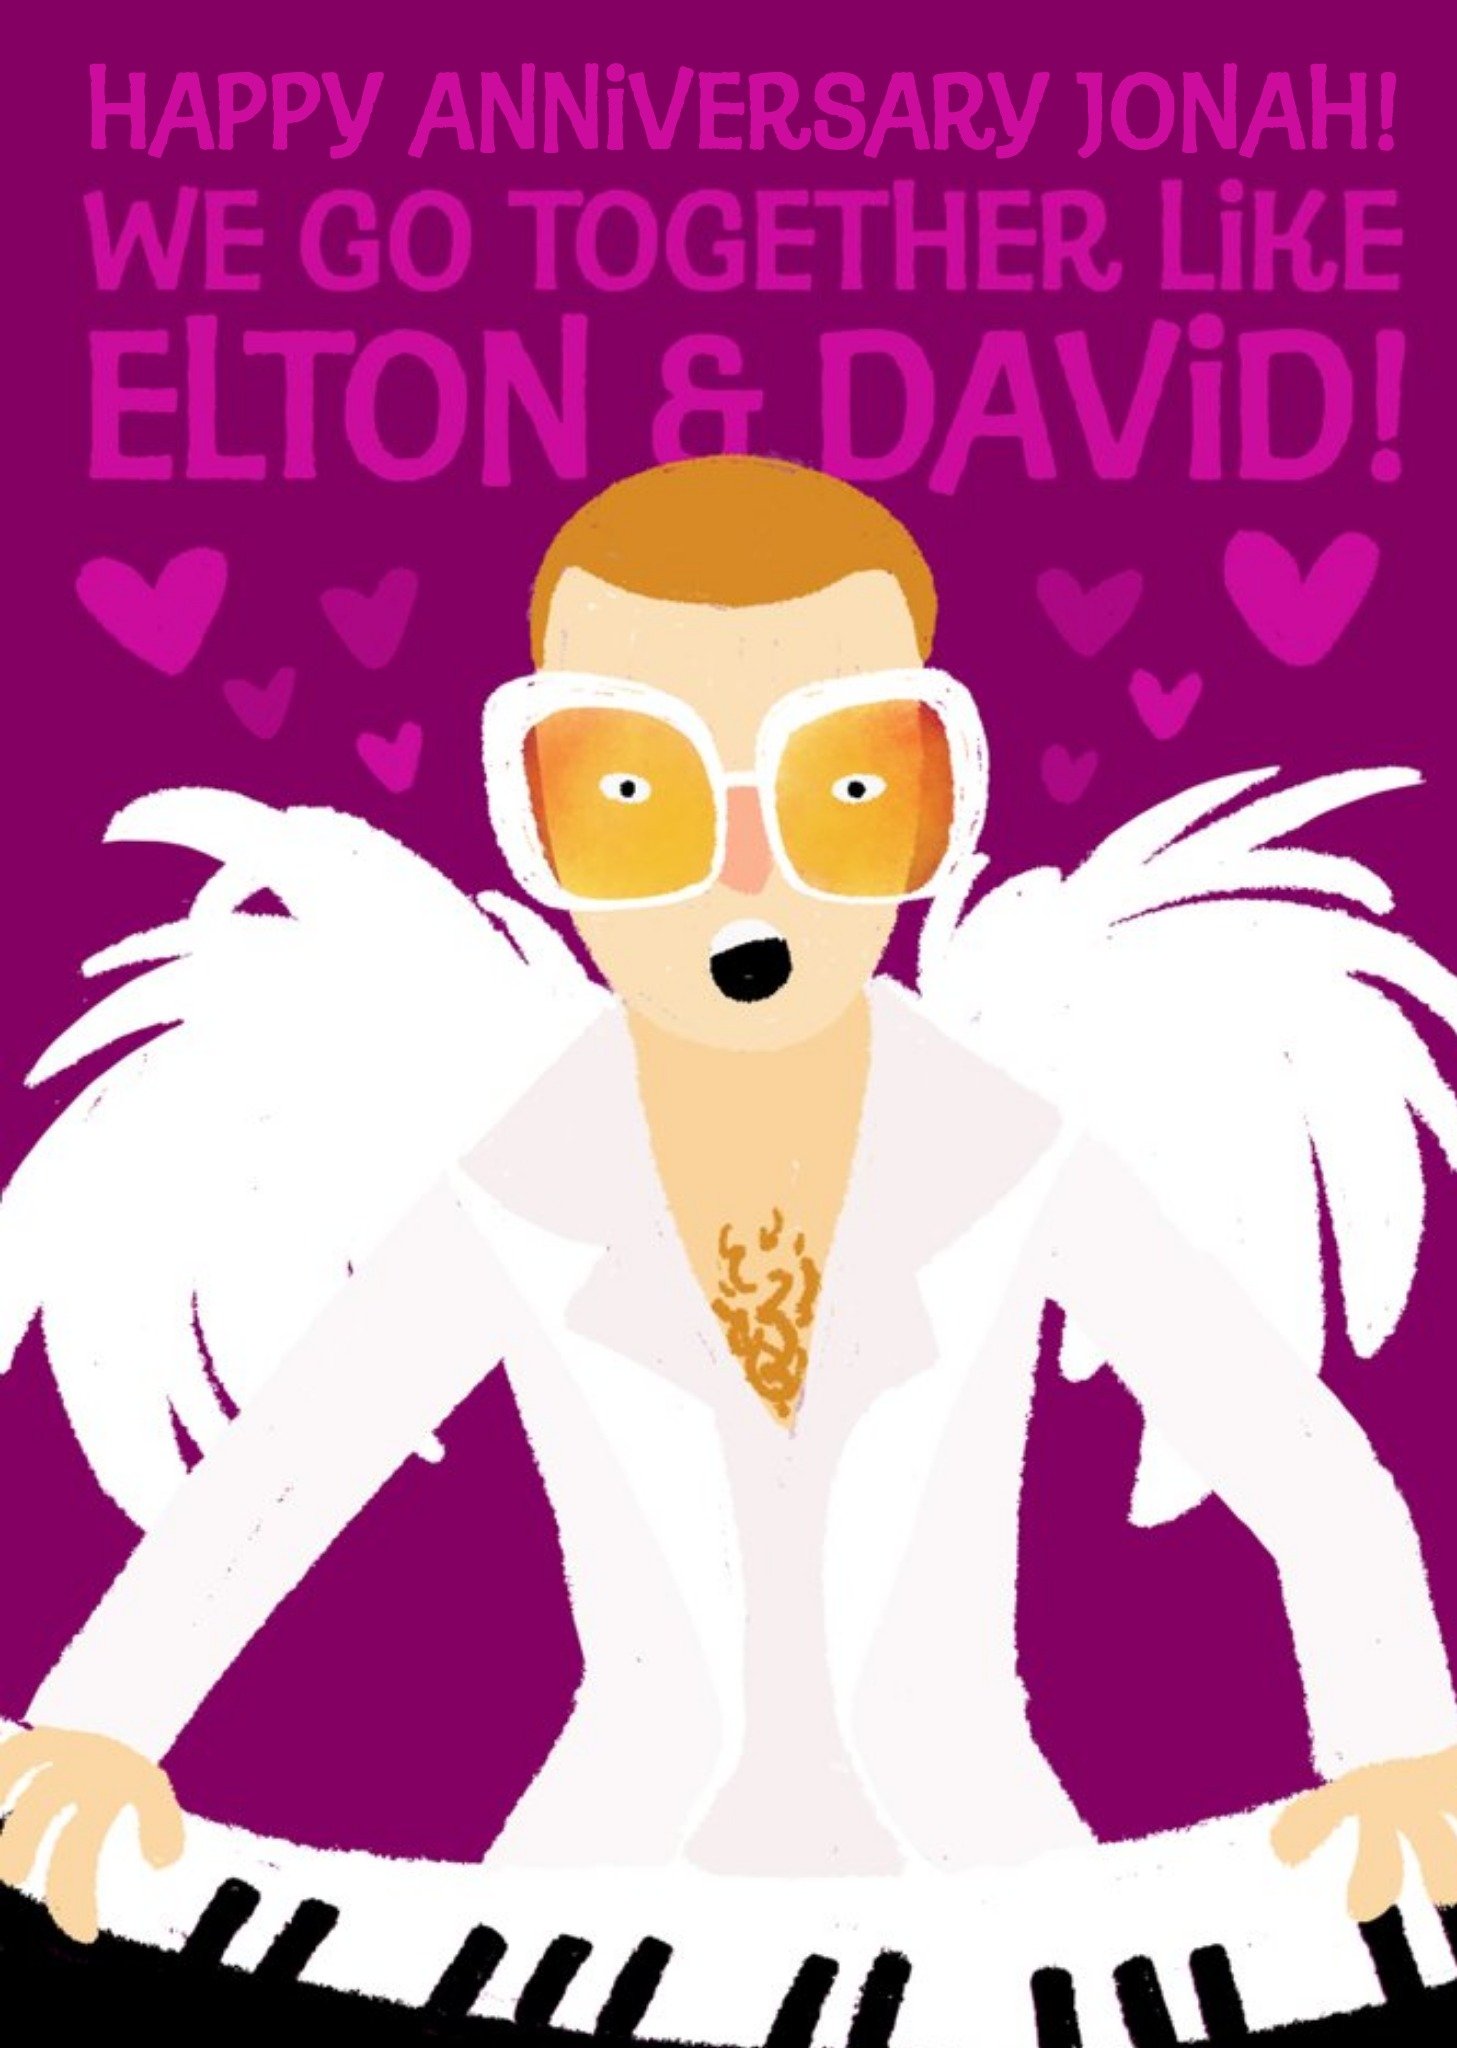 Moonpig Elton John Funny Anniversary Card - We Go Together Like Elton And David, Large